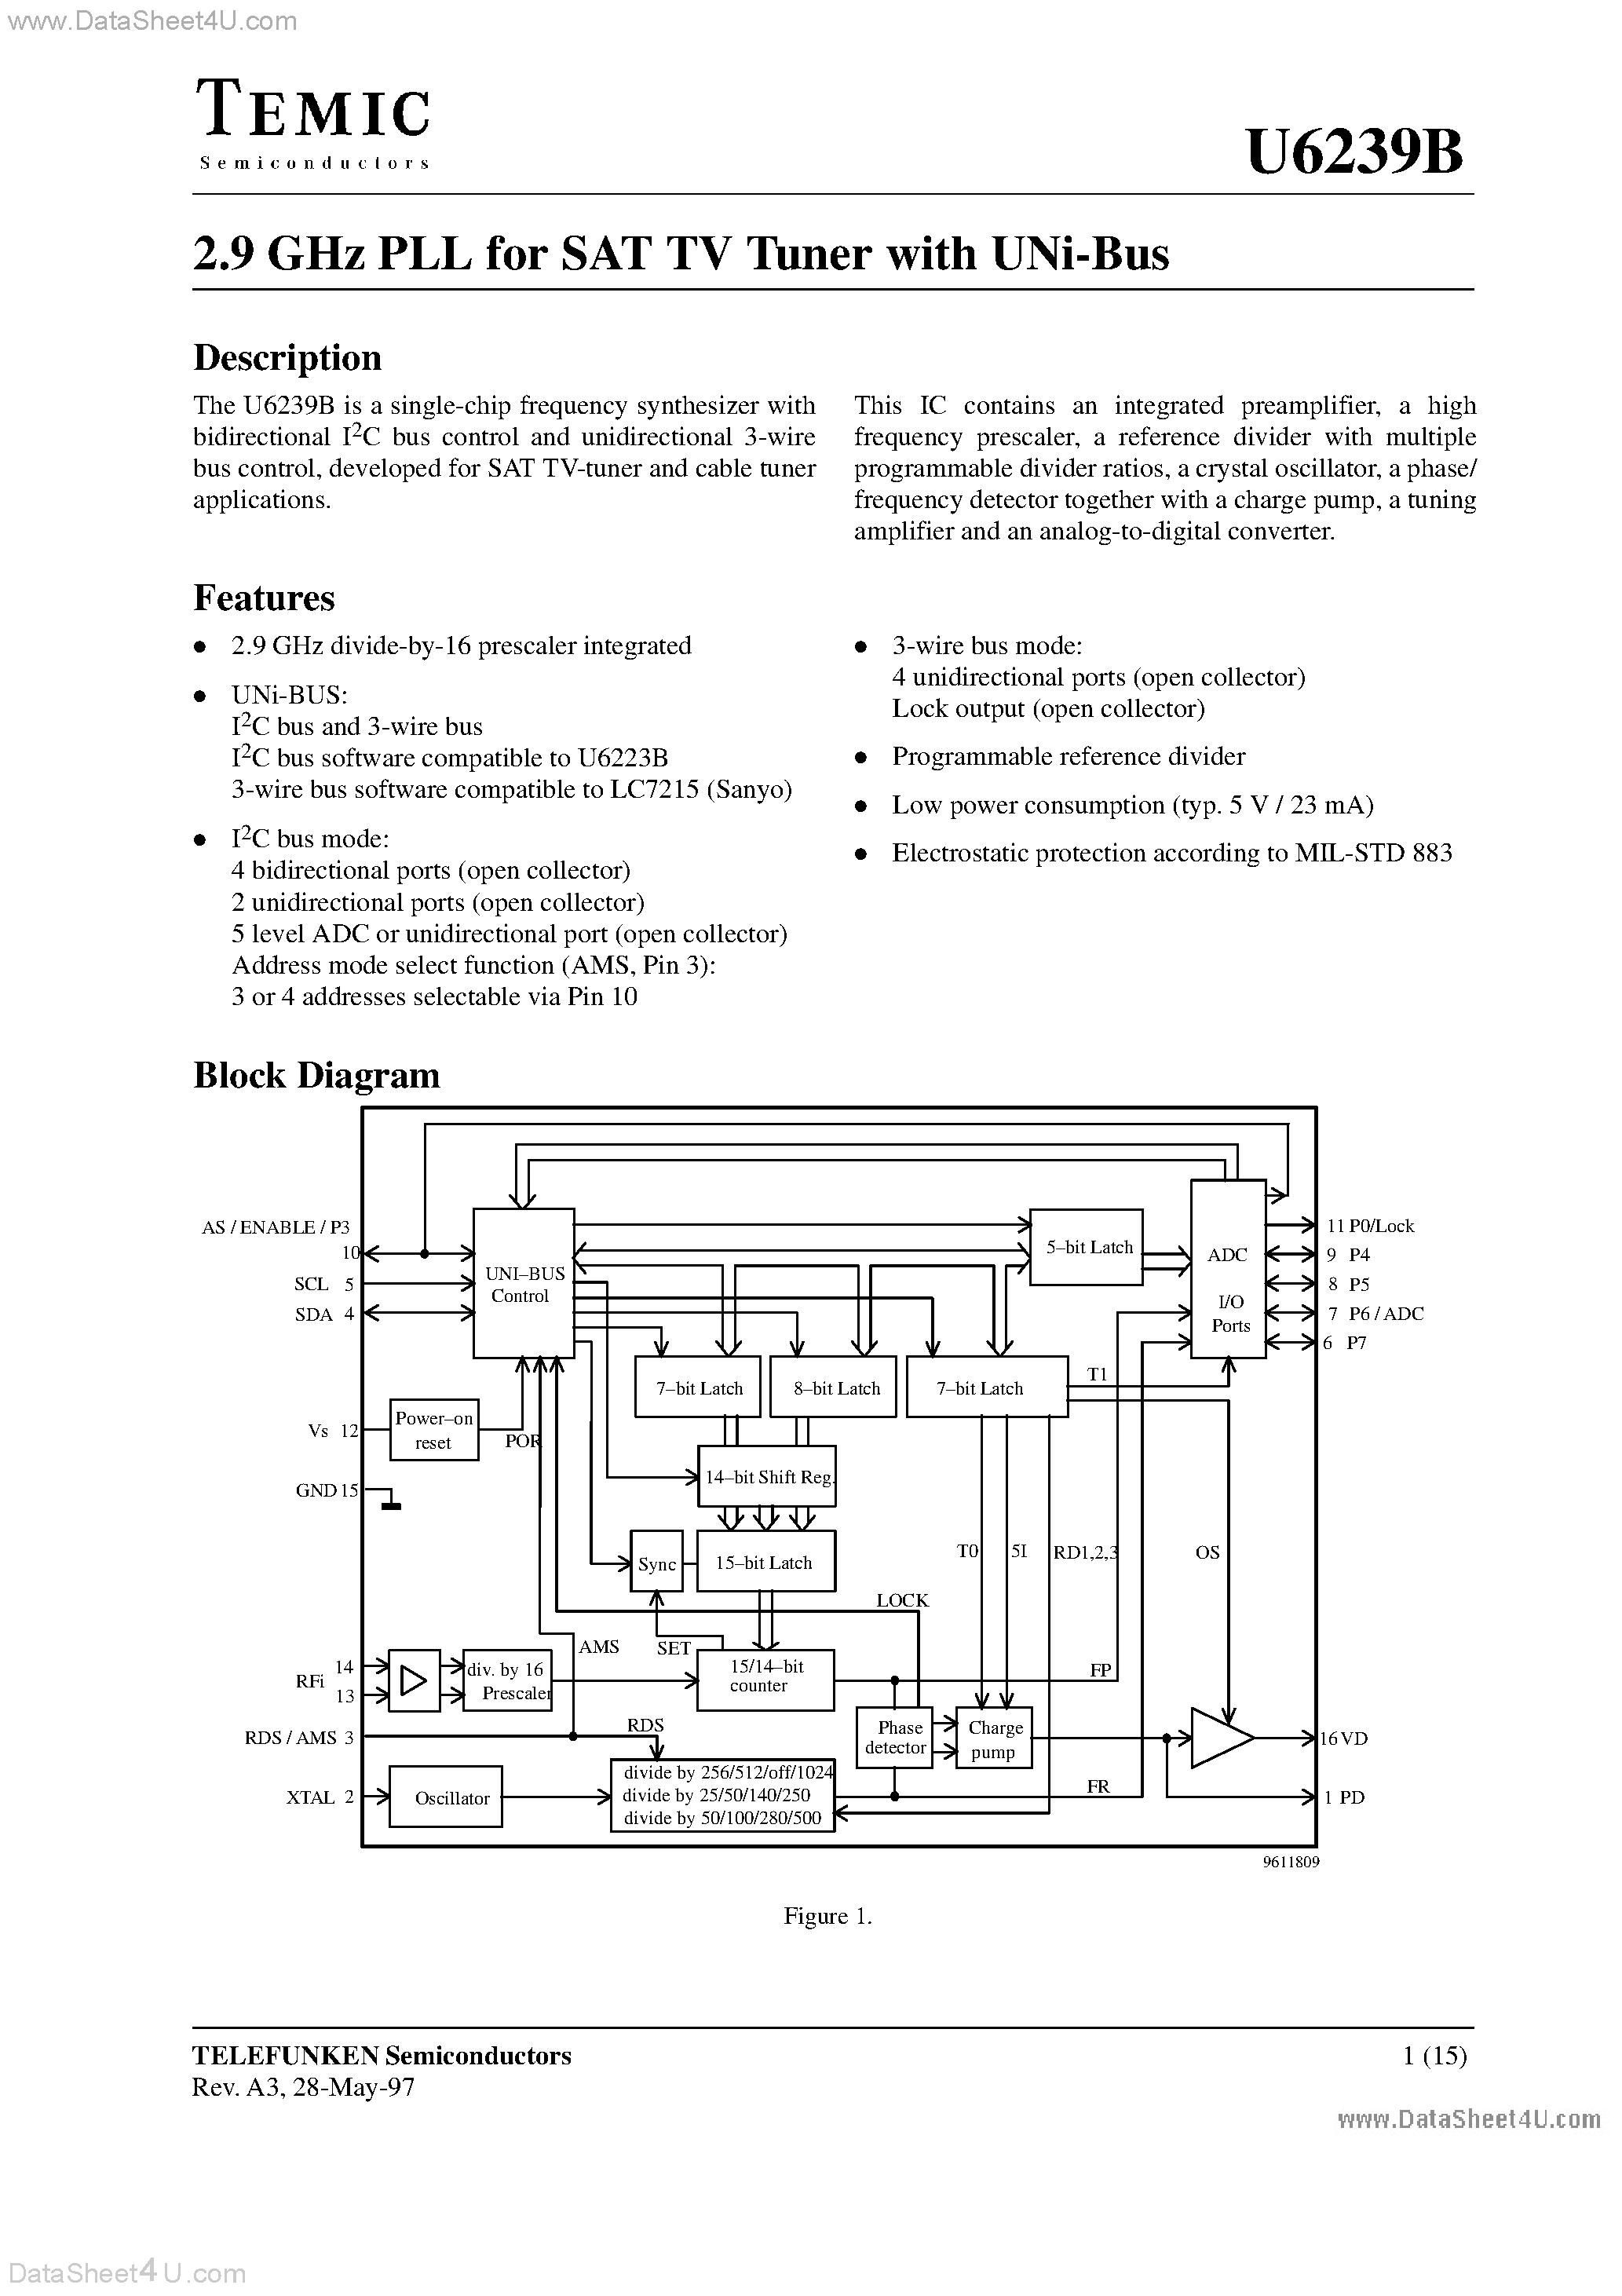 Datasheet U6239B - 2.9 GHz PLL page 1